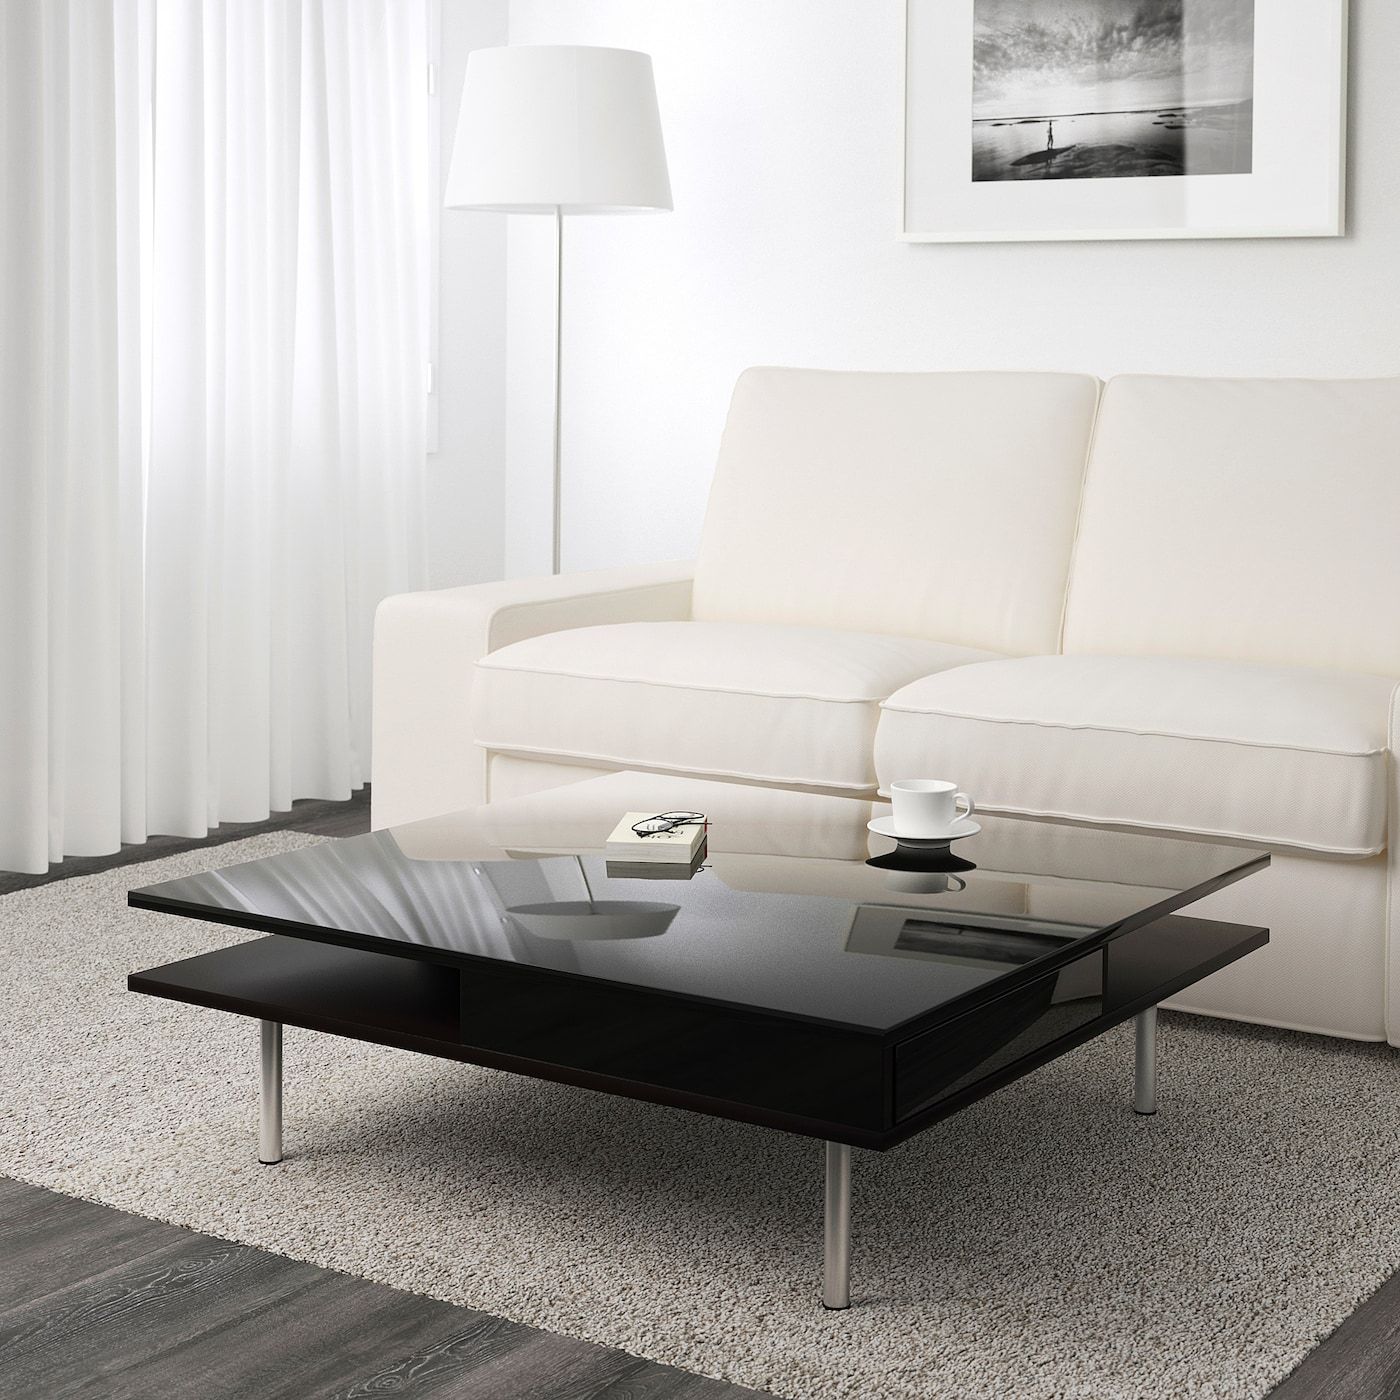 Tofteryd Coffee Table, High Gloss Black, 95x95 Cm – Ikea With High Gloss Black Coffee Tables (View 15 of 15)